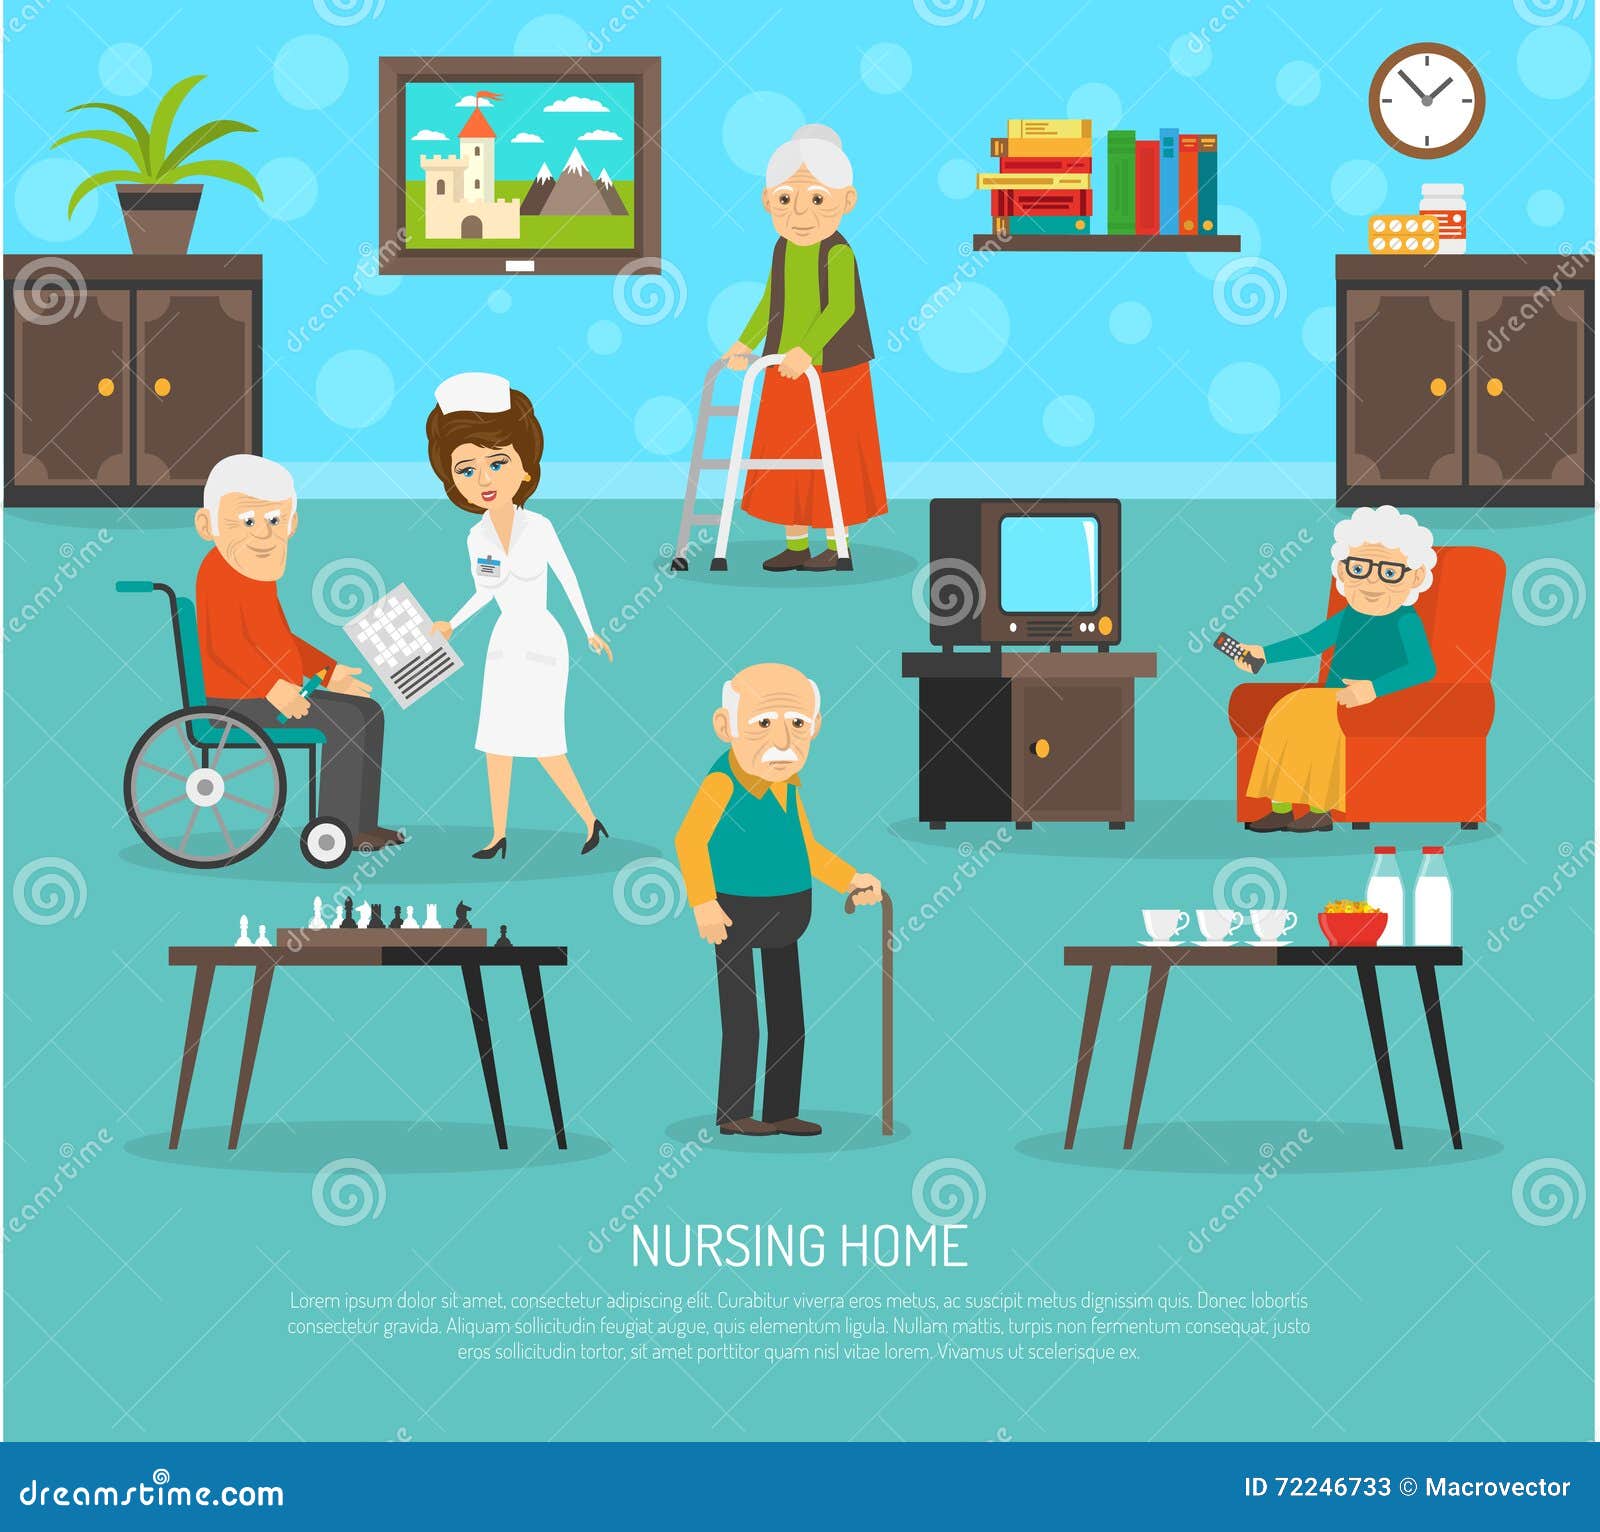 old people nursing home flat poster